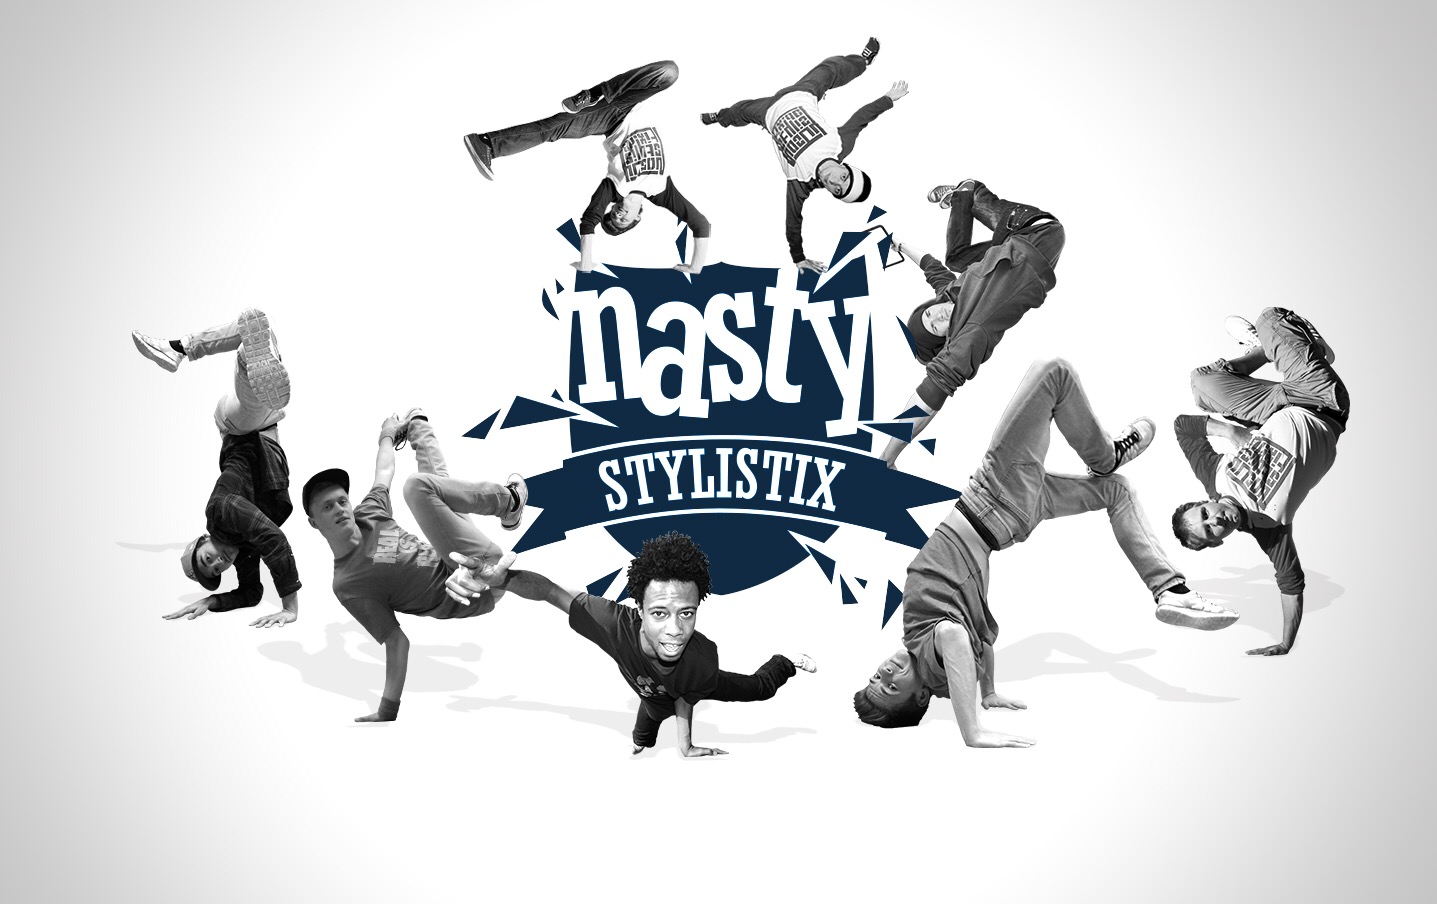  Breakdance mit Nasty Stylistix